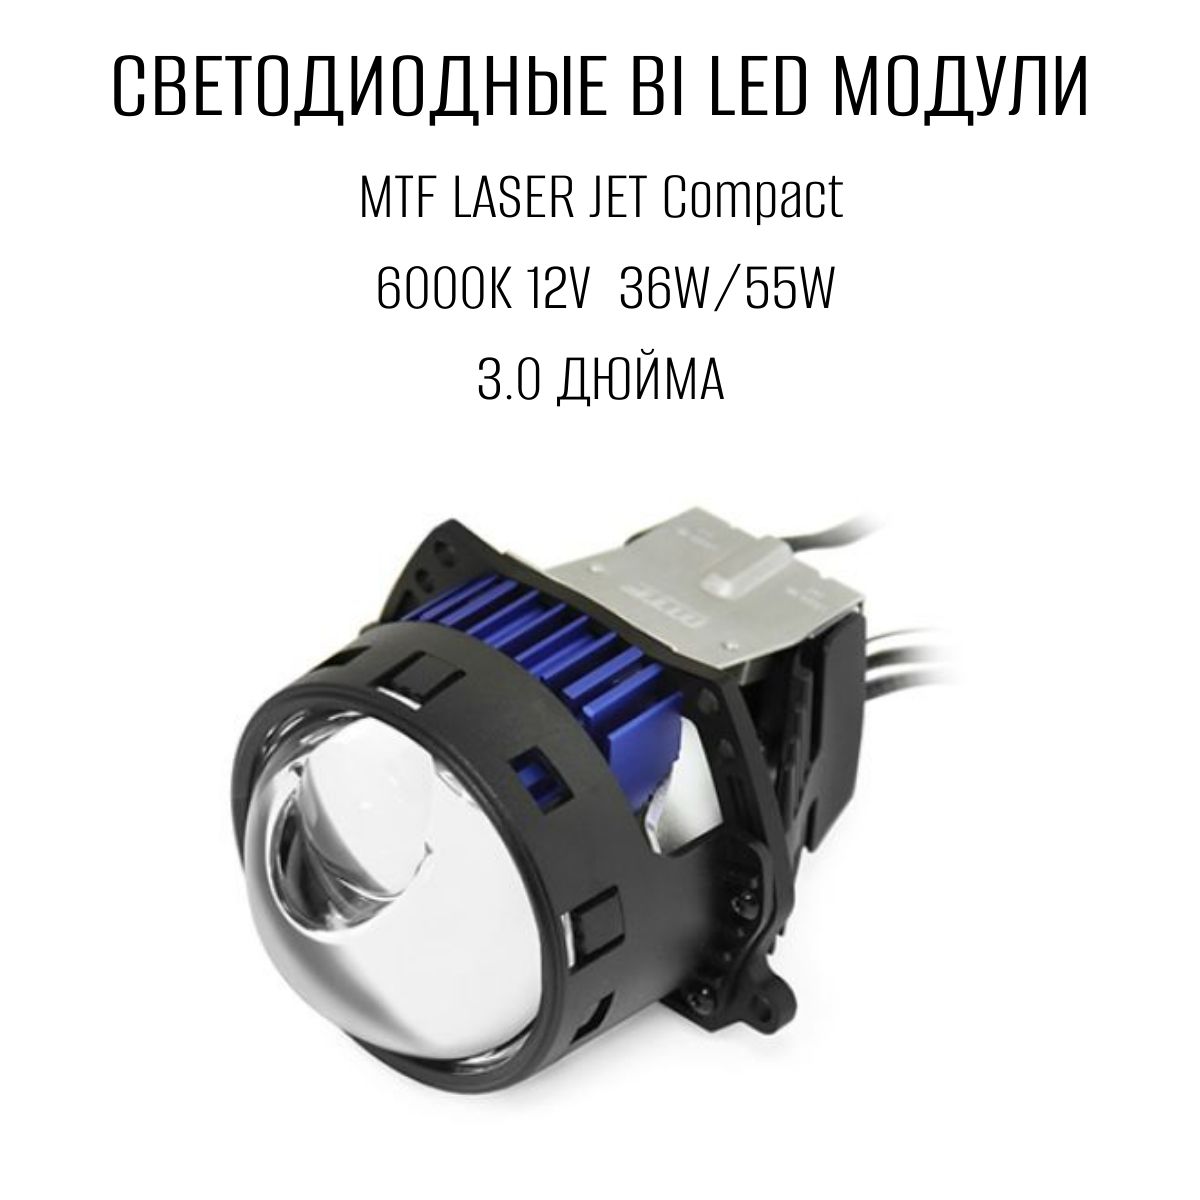 Би лед лазер. MTF Light Laser Jet bi-led 3.0 6000k линзы. Линзы МТФ би лед. Линзы МТФ би лед Jet 3 дюйма. MTF LASERJET bi led.